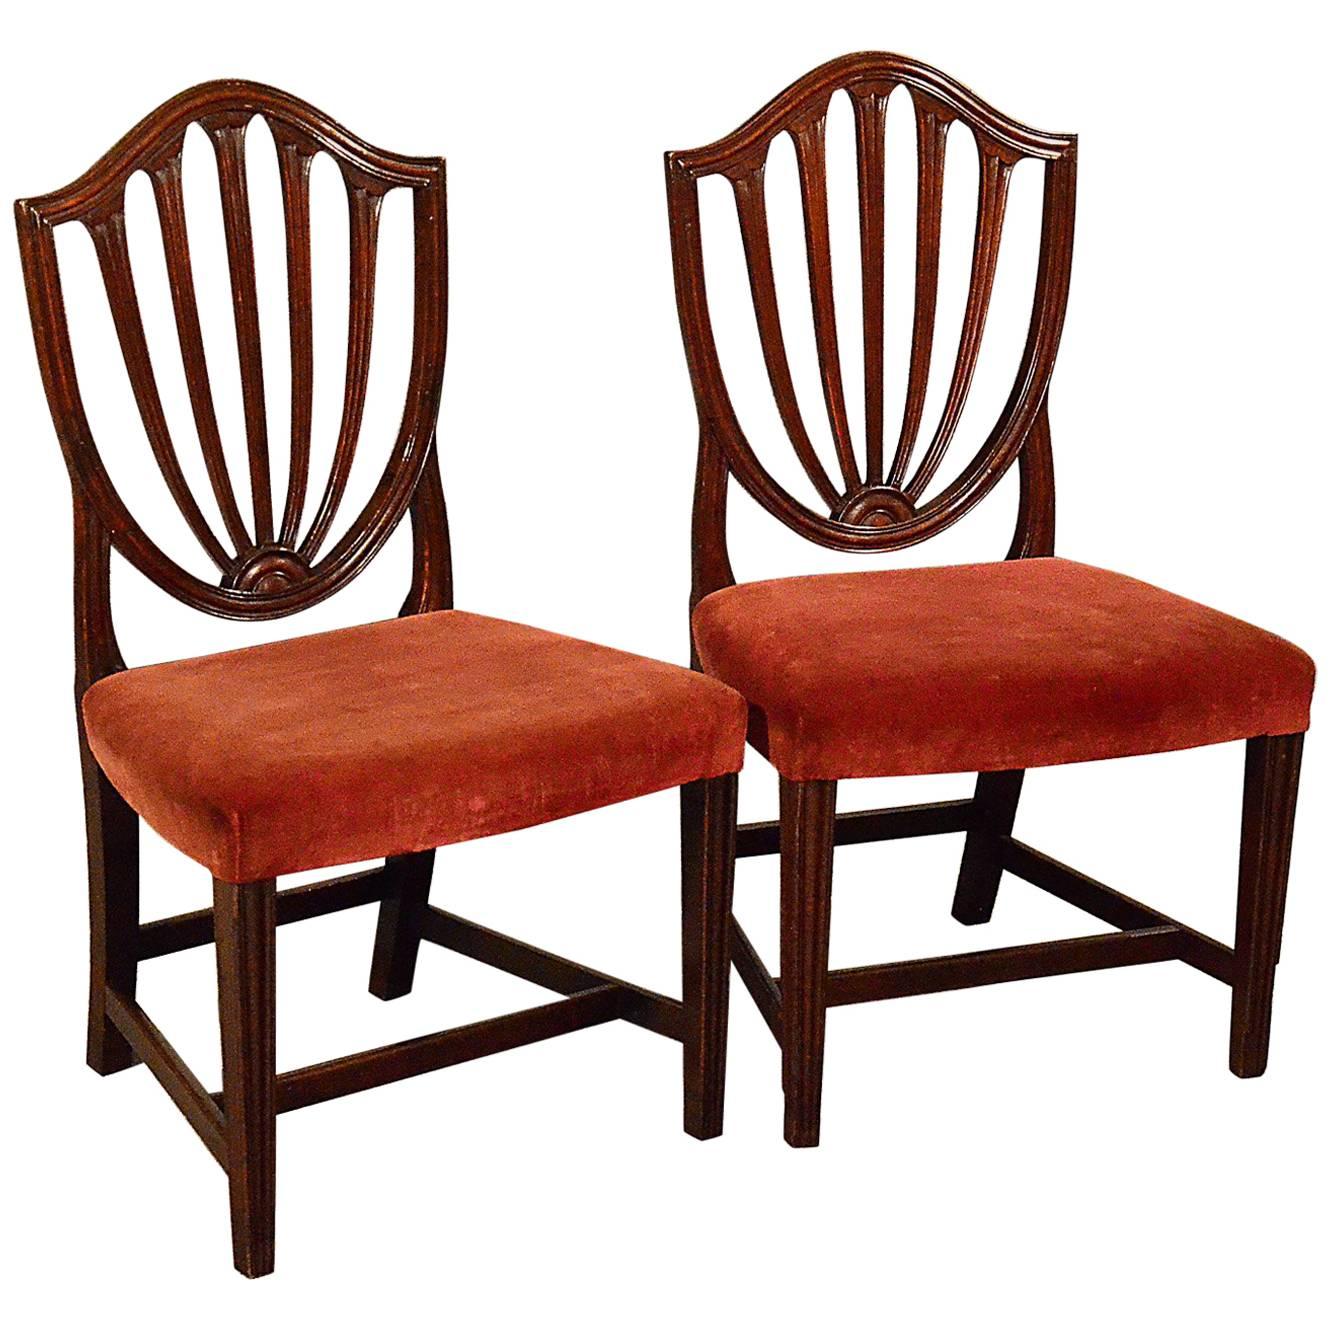 Pair of Wide Side Dining Shield Chairs English Georgian Hepplewhite, circa 1800